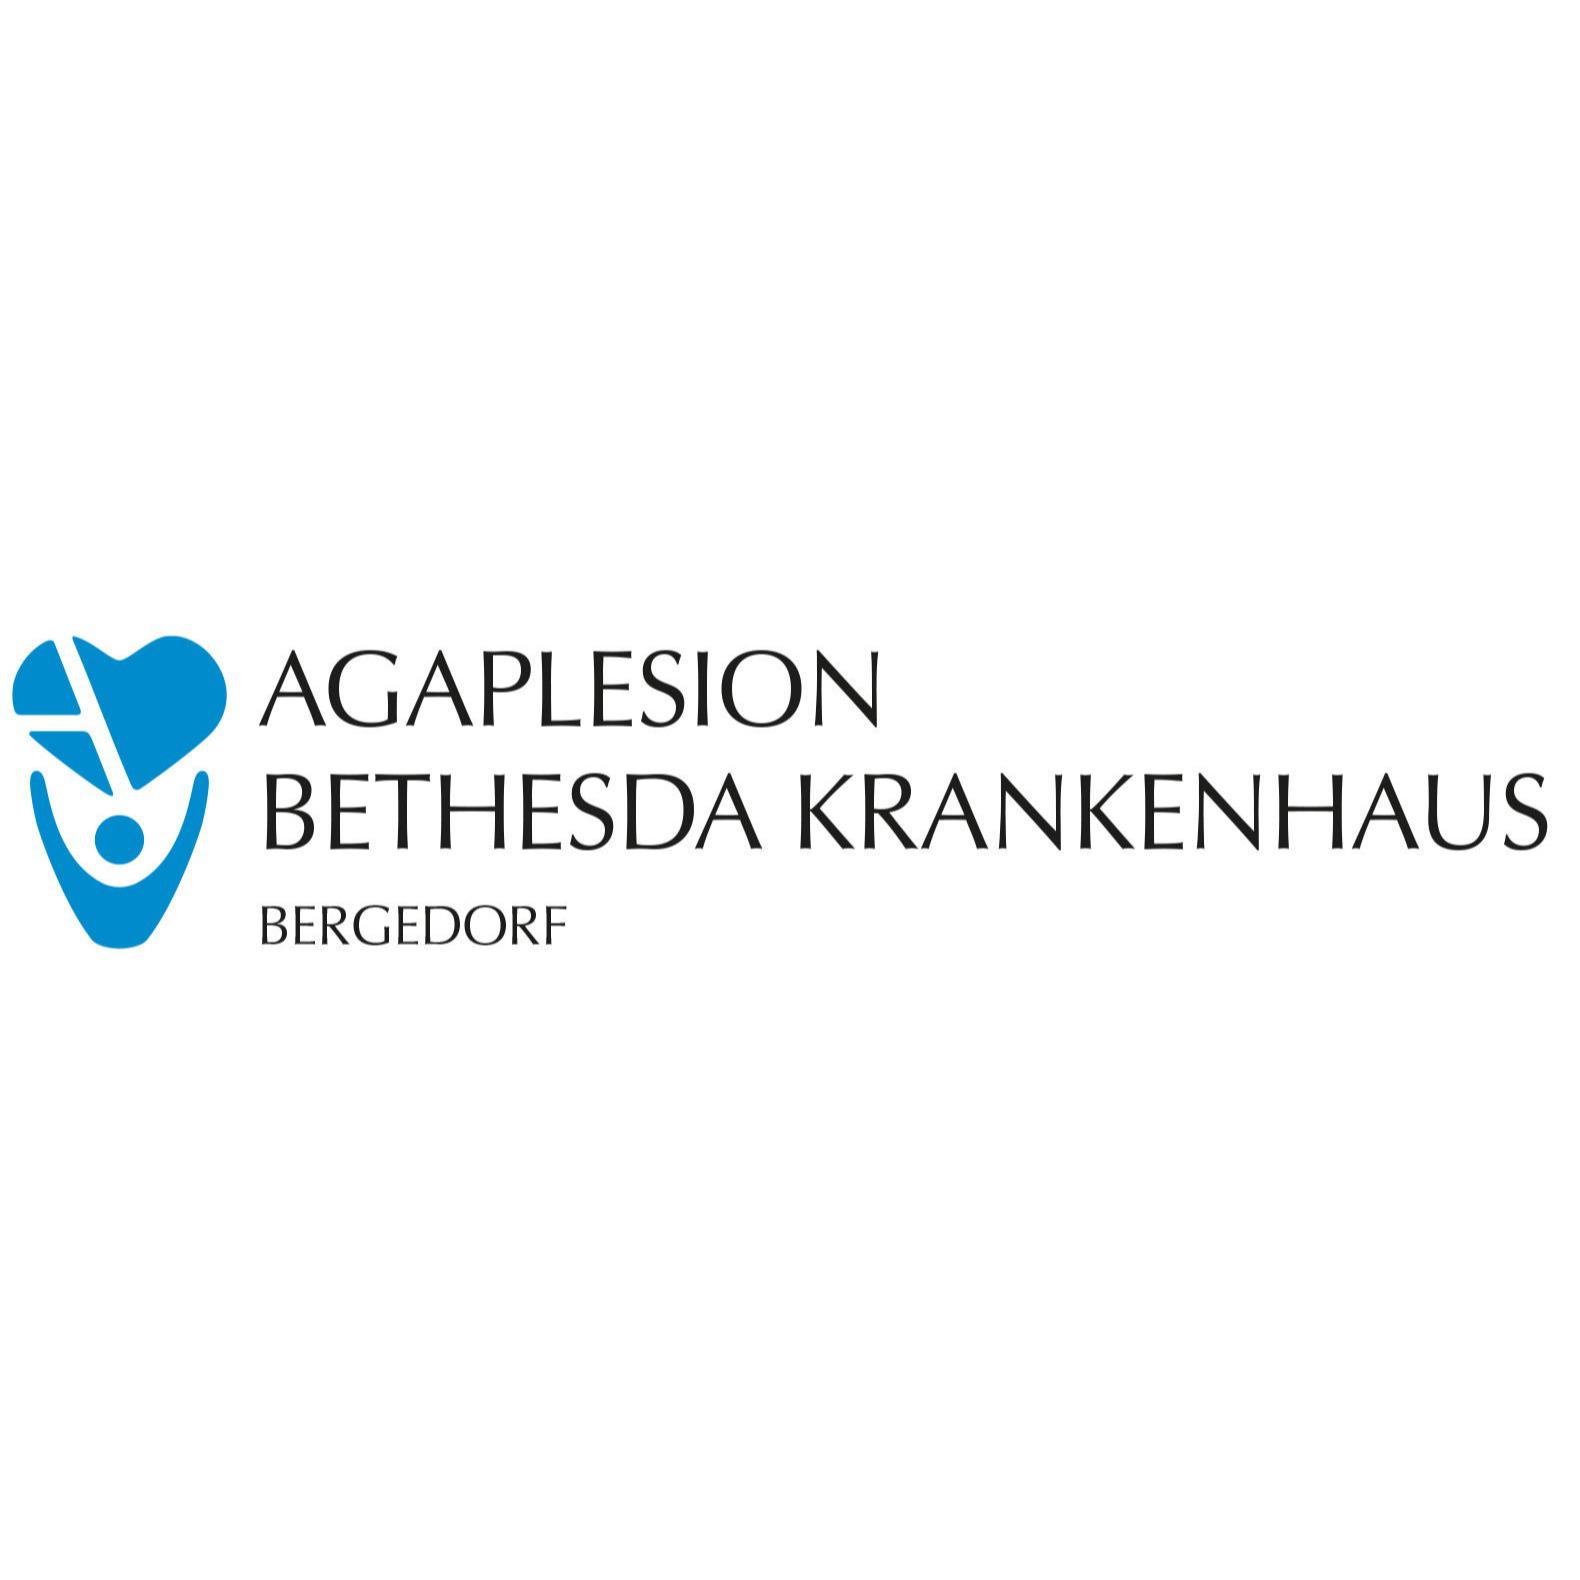 AGAPLESION BETHESDA KRANKENHAUS BERGEDORF  